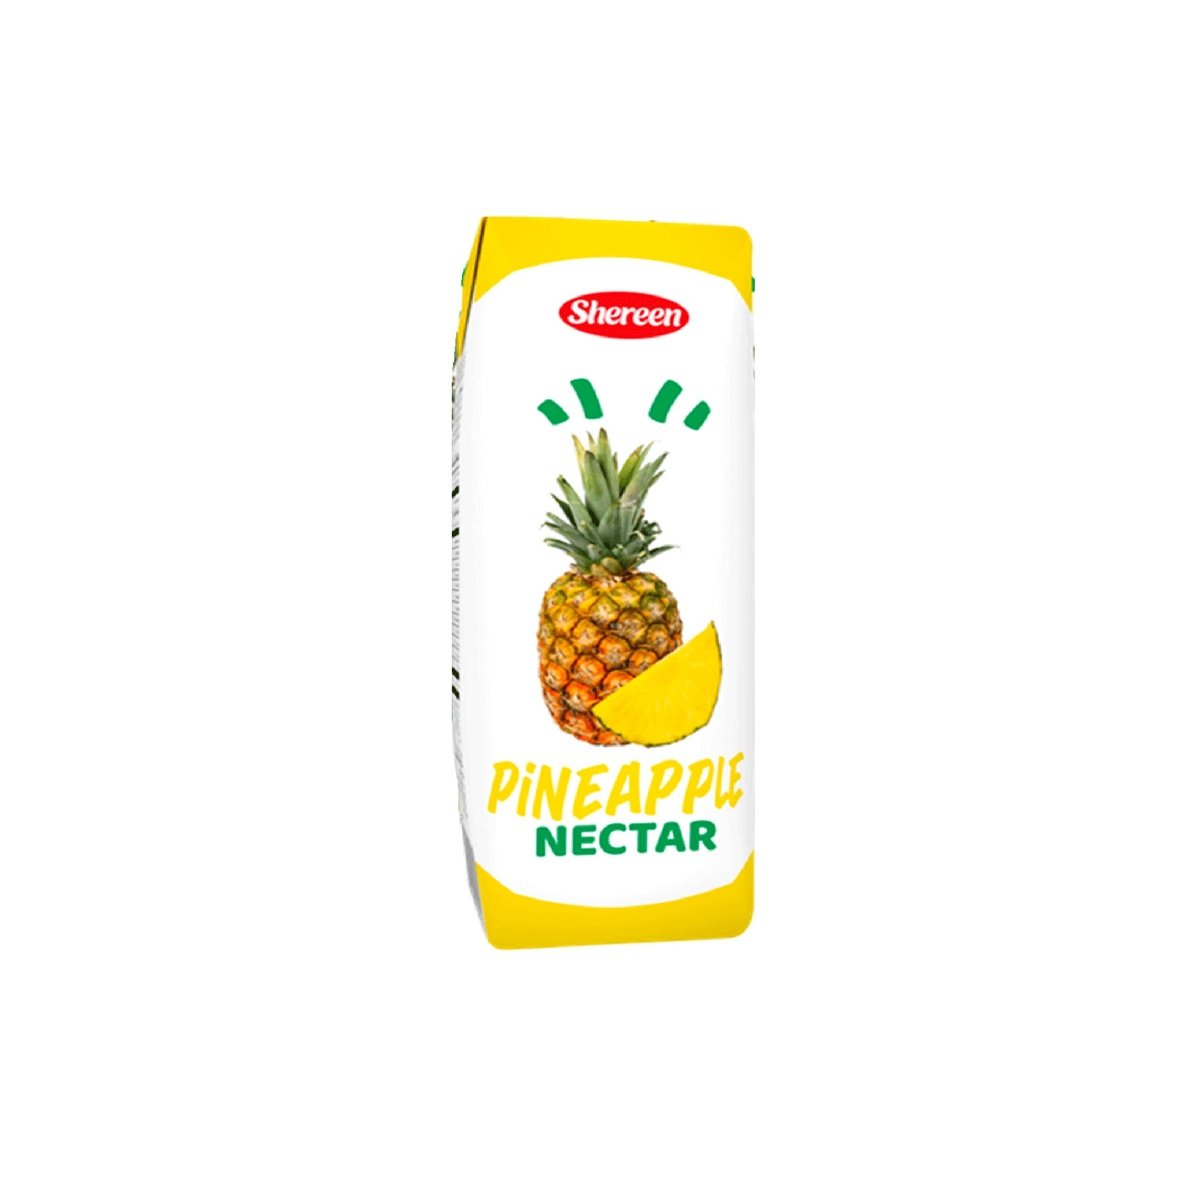 Shereen Pineapple Nectar Juice Tetra Pack 6 x 250 ml